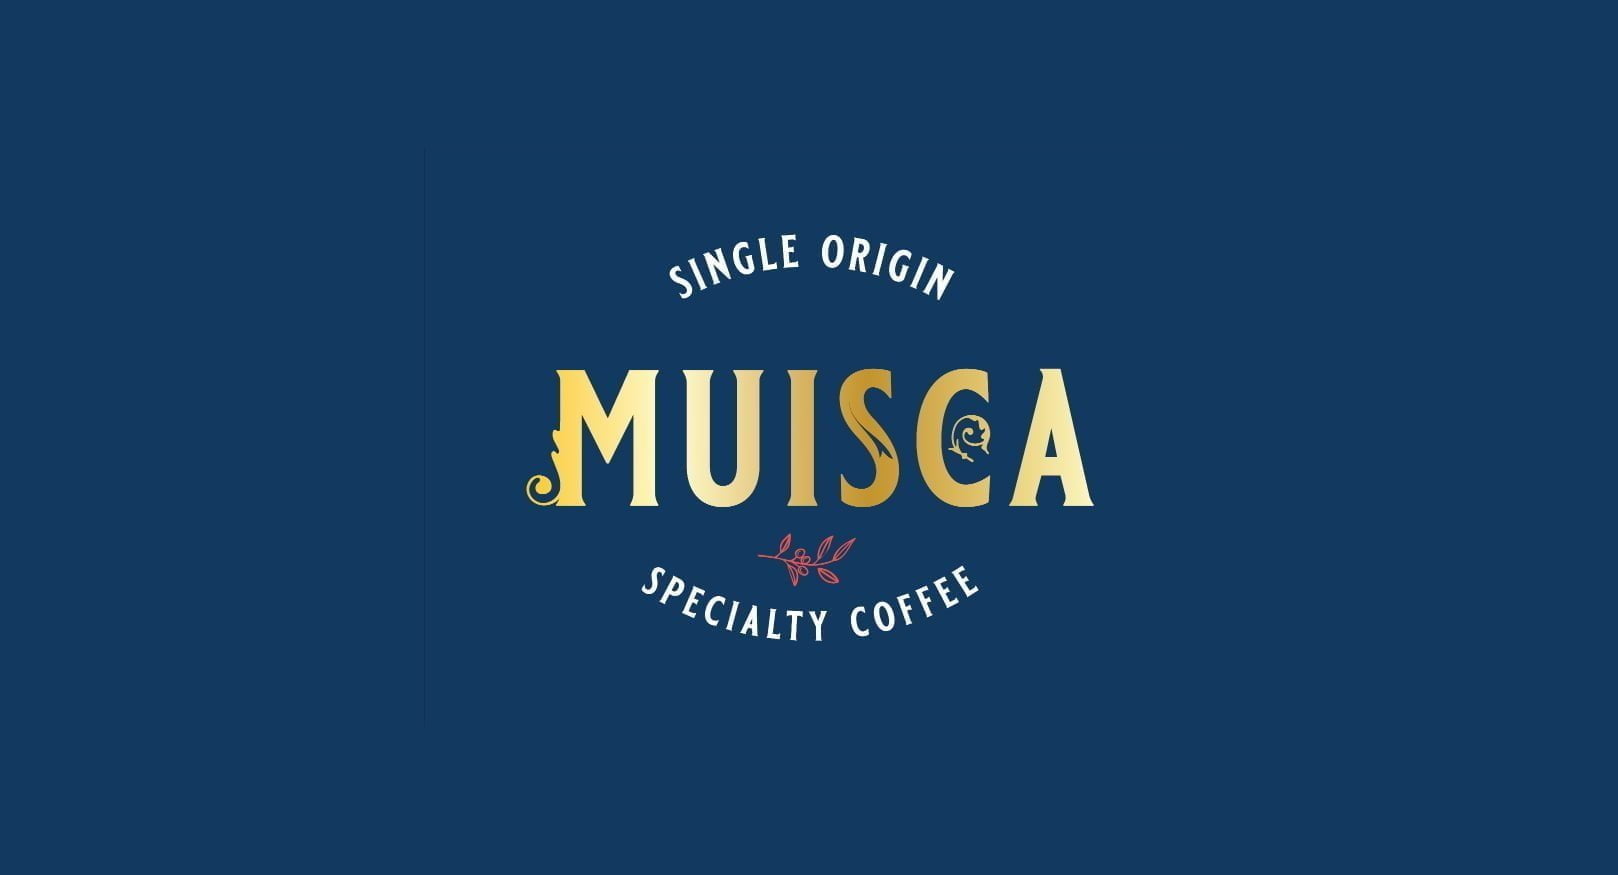 Muisca logo by birr agency